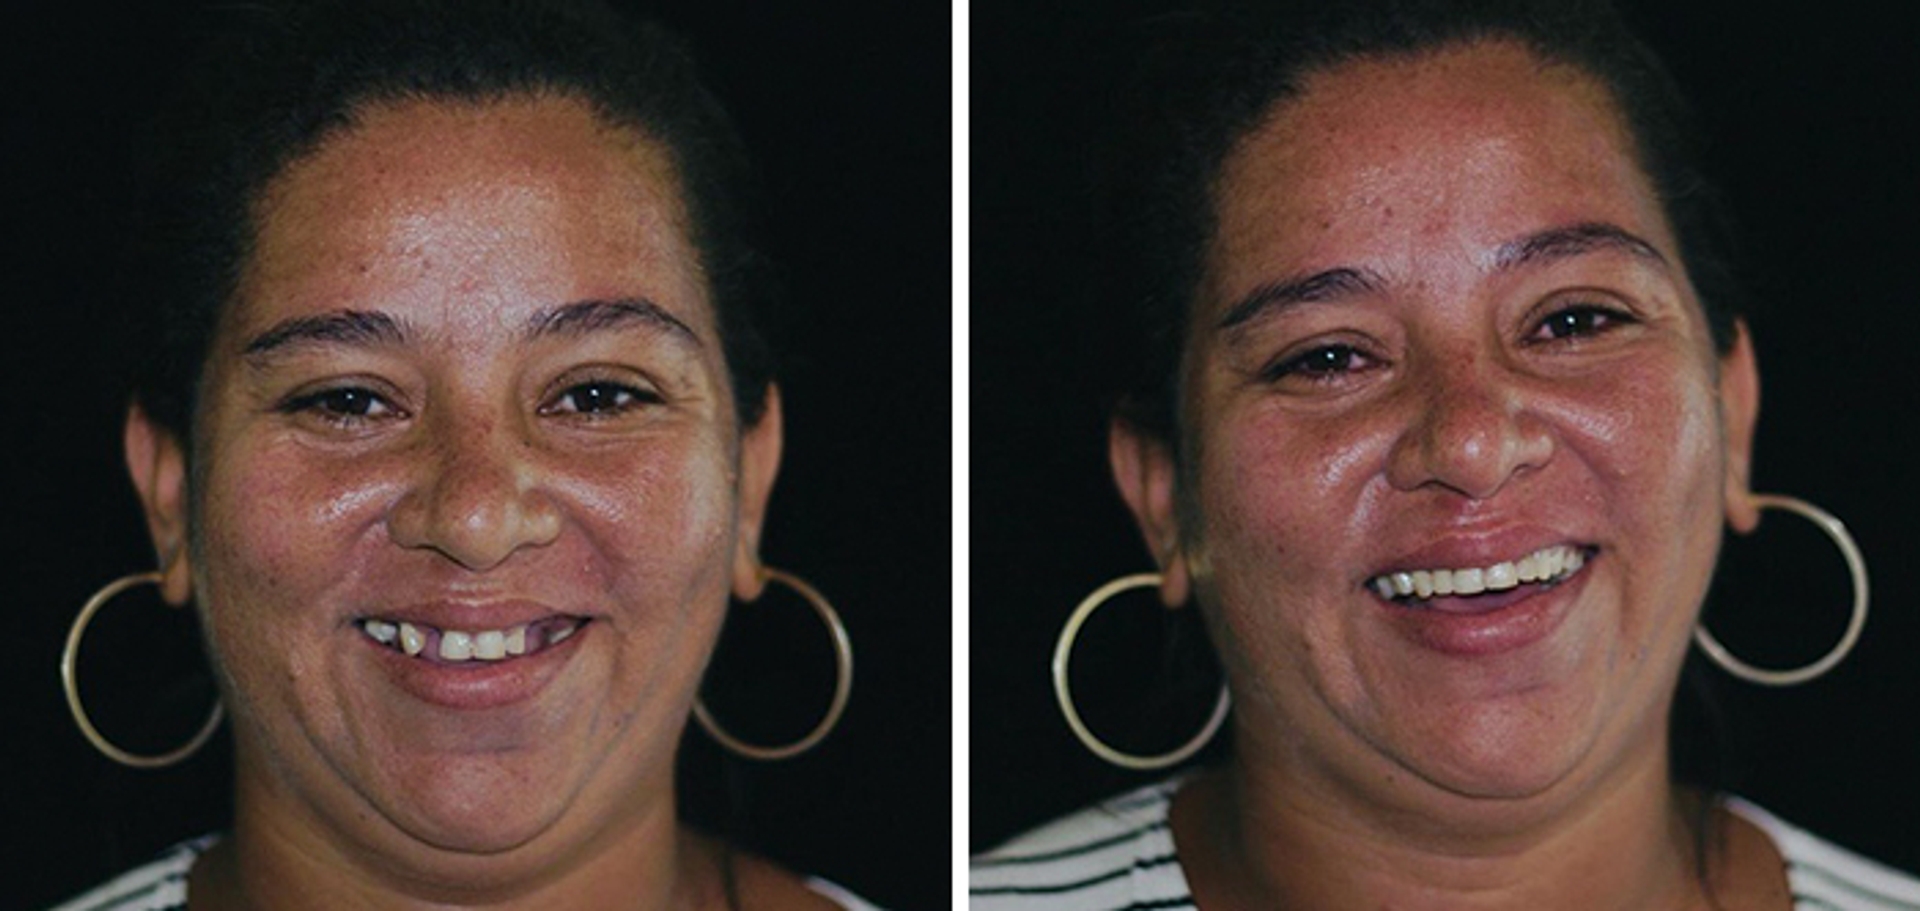 brazilian-dentist-travel-poor-people-teeth-fix-felipe-rossi-24-5db941af5d19b__700